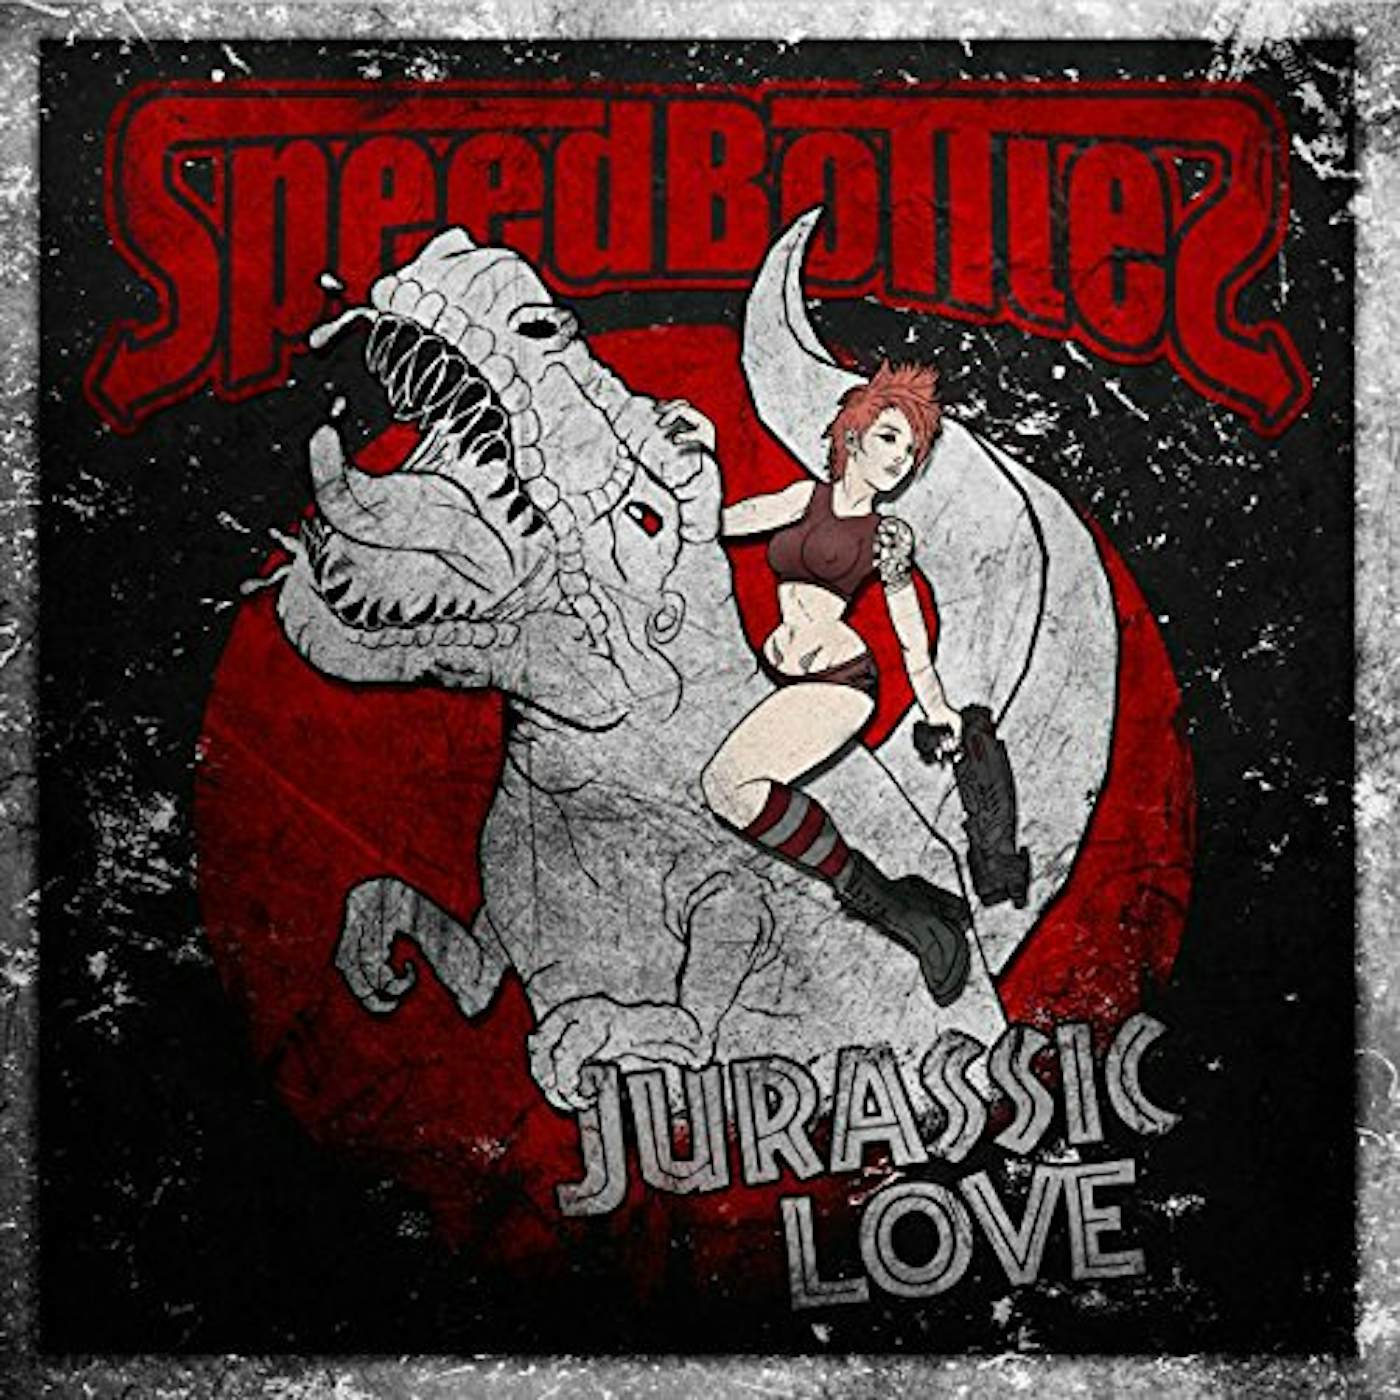 SpeedBottles Jurassic Love Vinyl Record